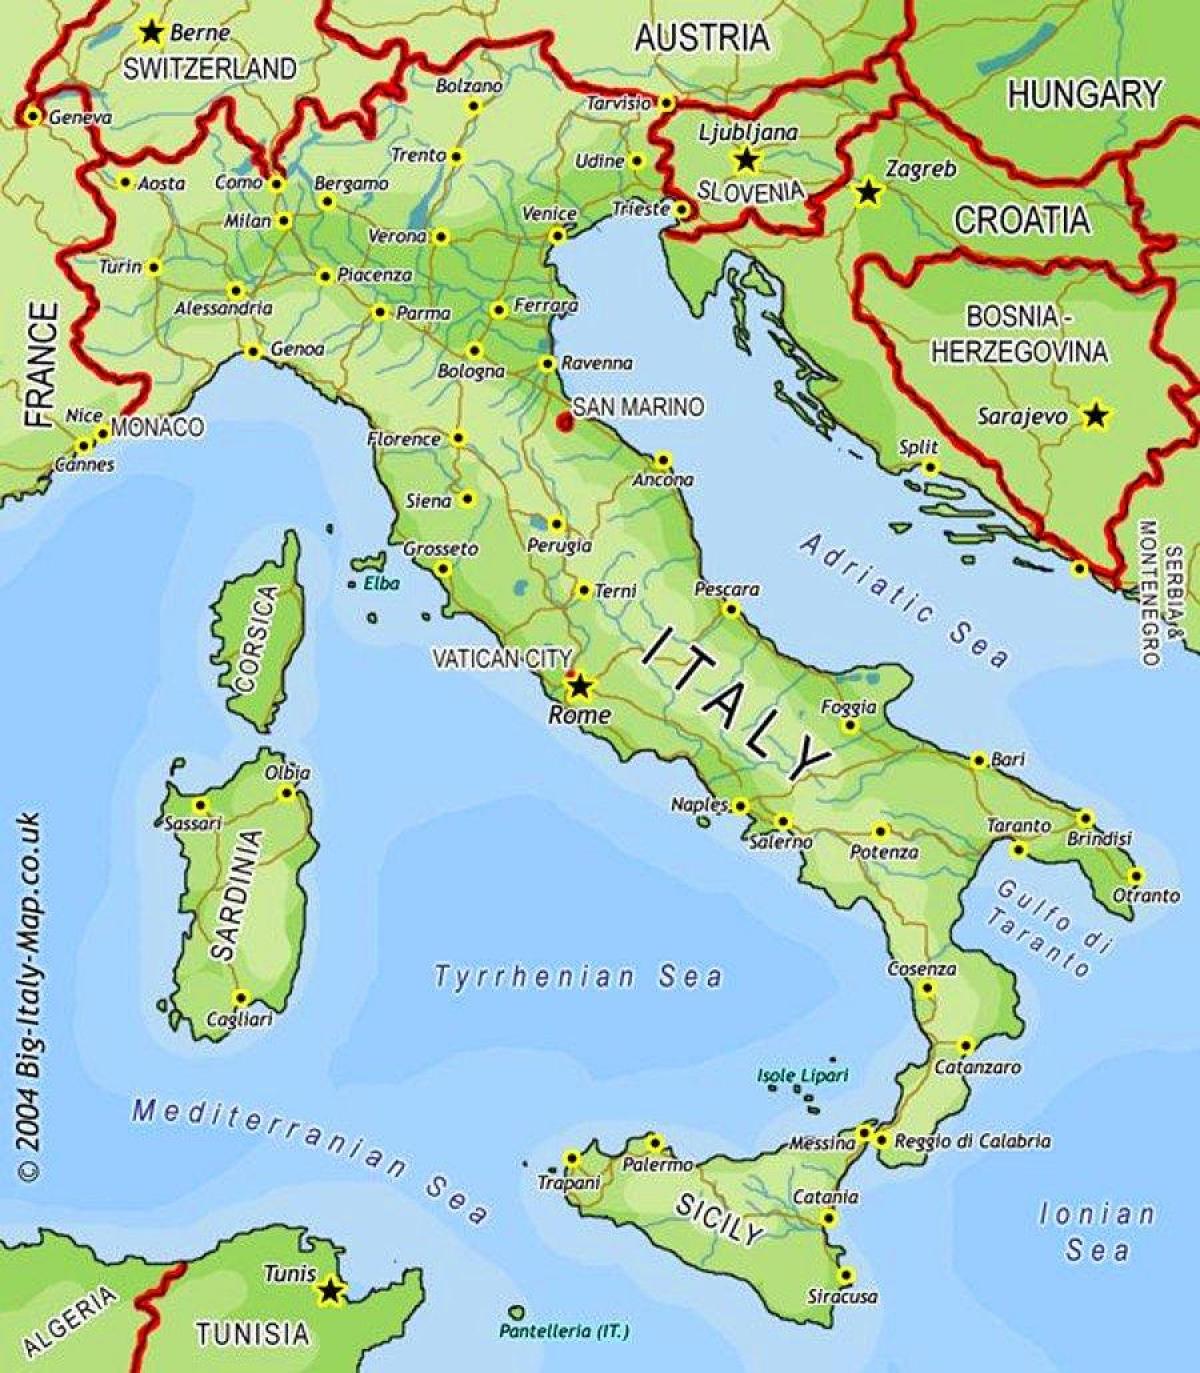 Mapa da Itália e dos países limítrofes